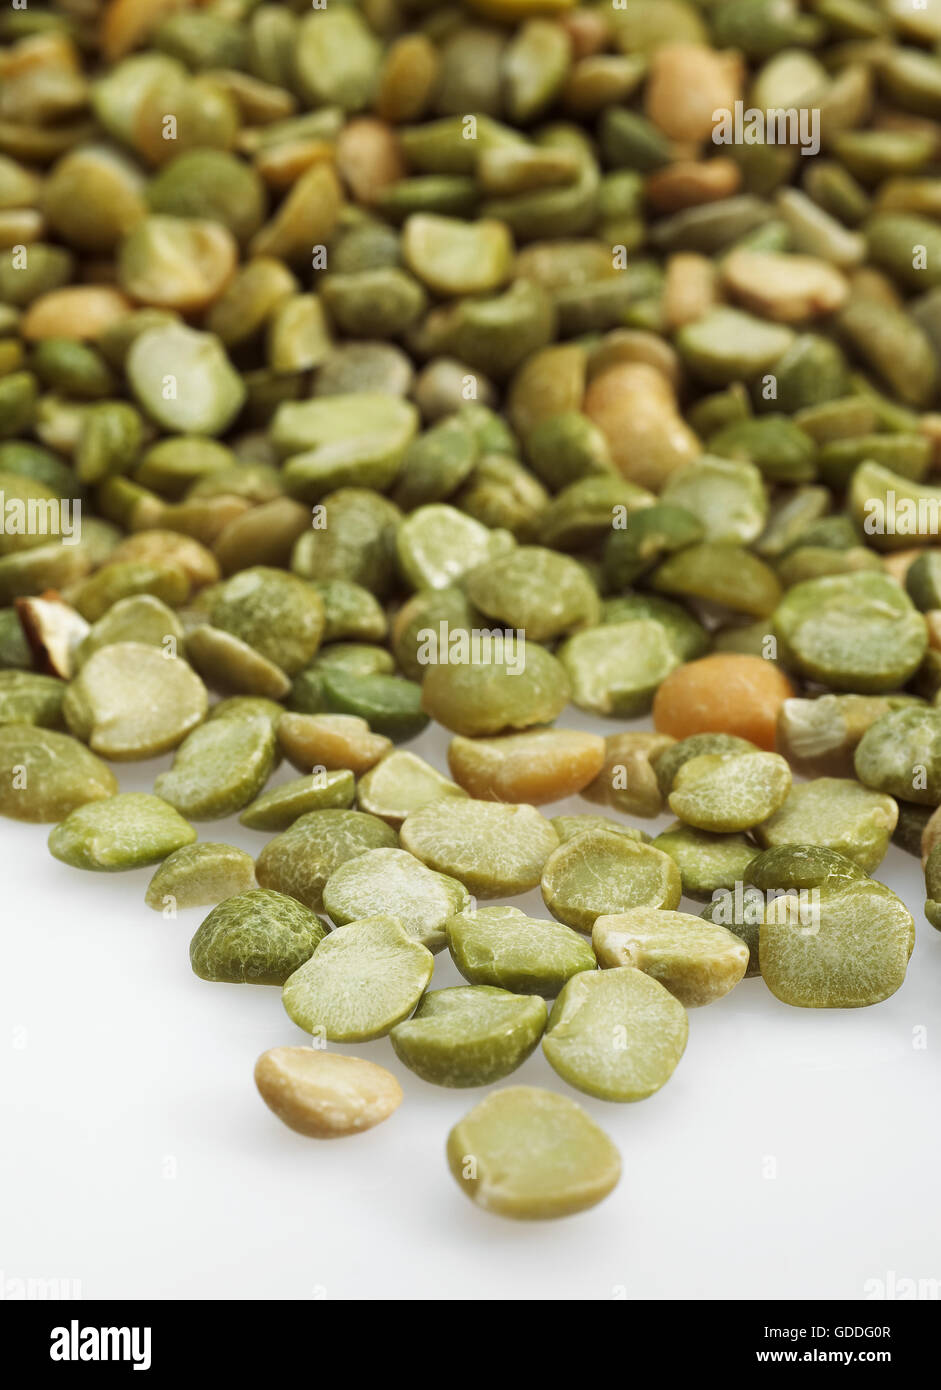 Split Peas, pisum sativum, Seeds against White Bakcground Stock Photo